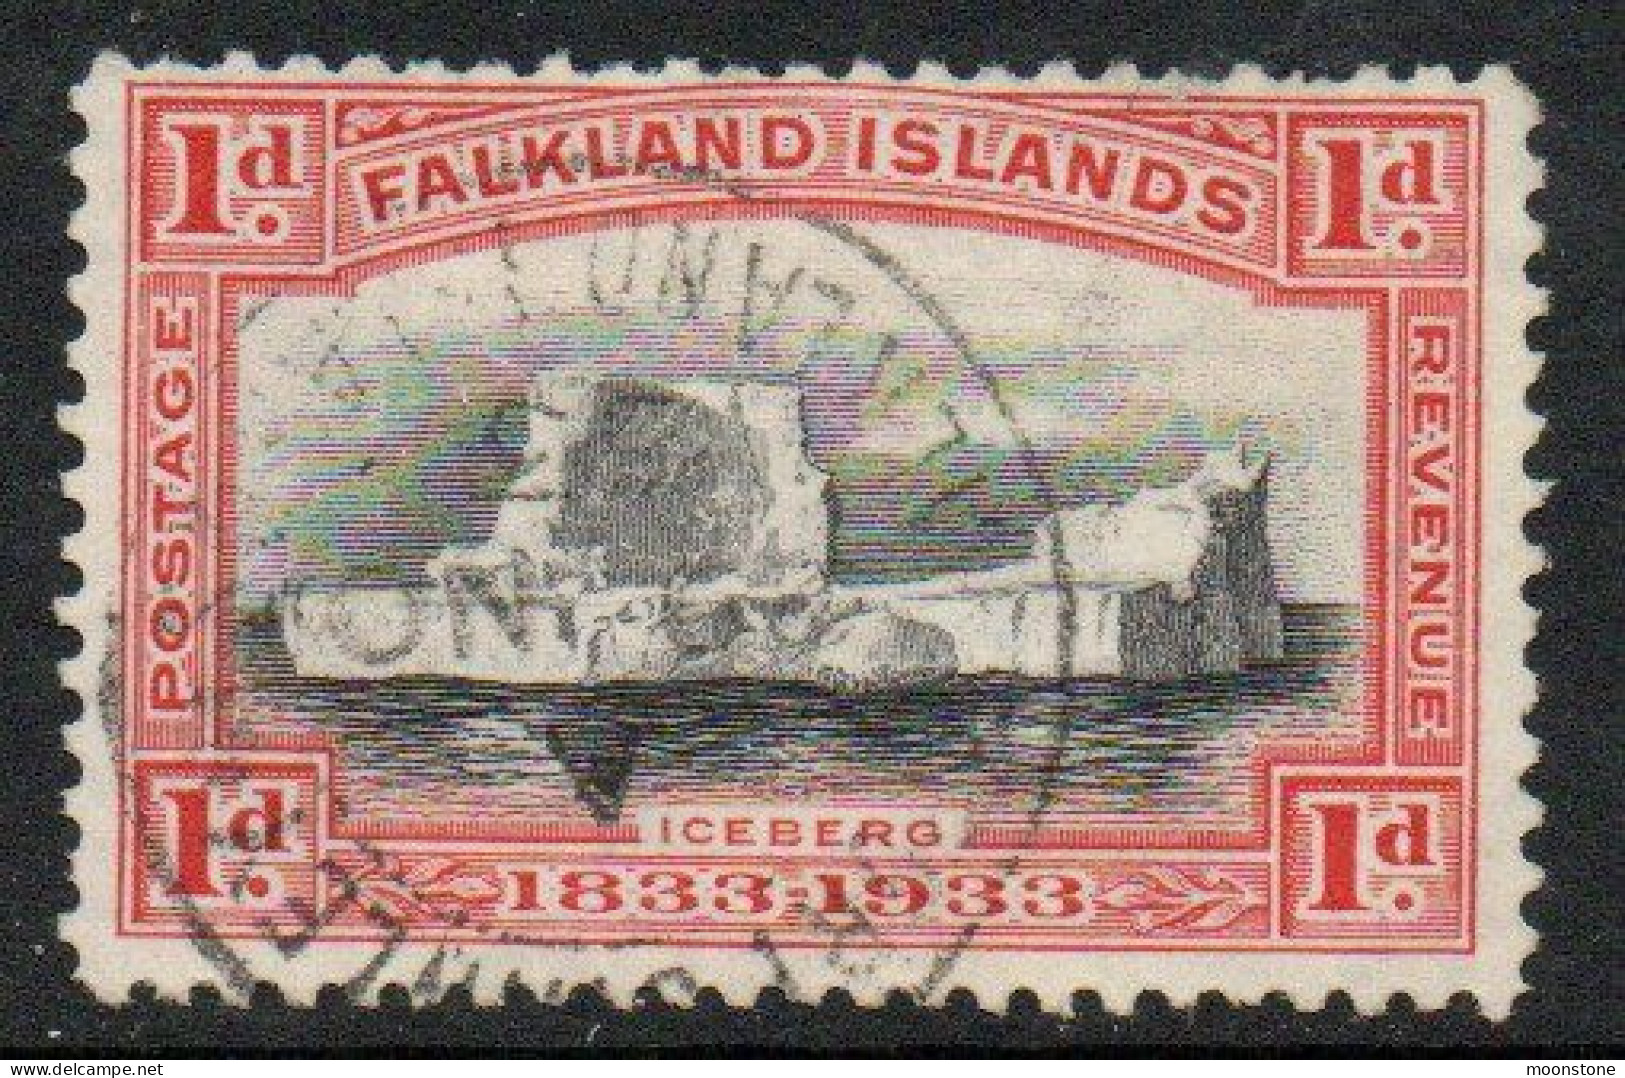 Falkland Islands GV 1933 Centenary 1d Value, Wmk. Multiple Script CA, Used, SG 128 - Islas Malvinas